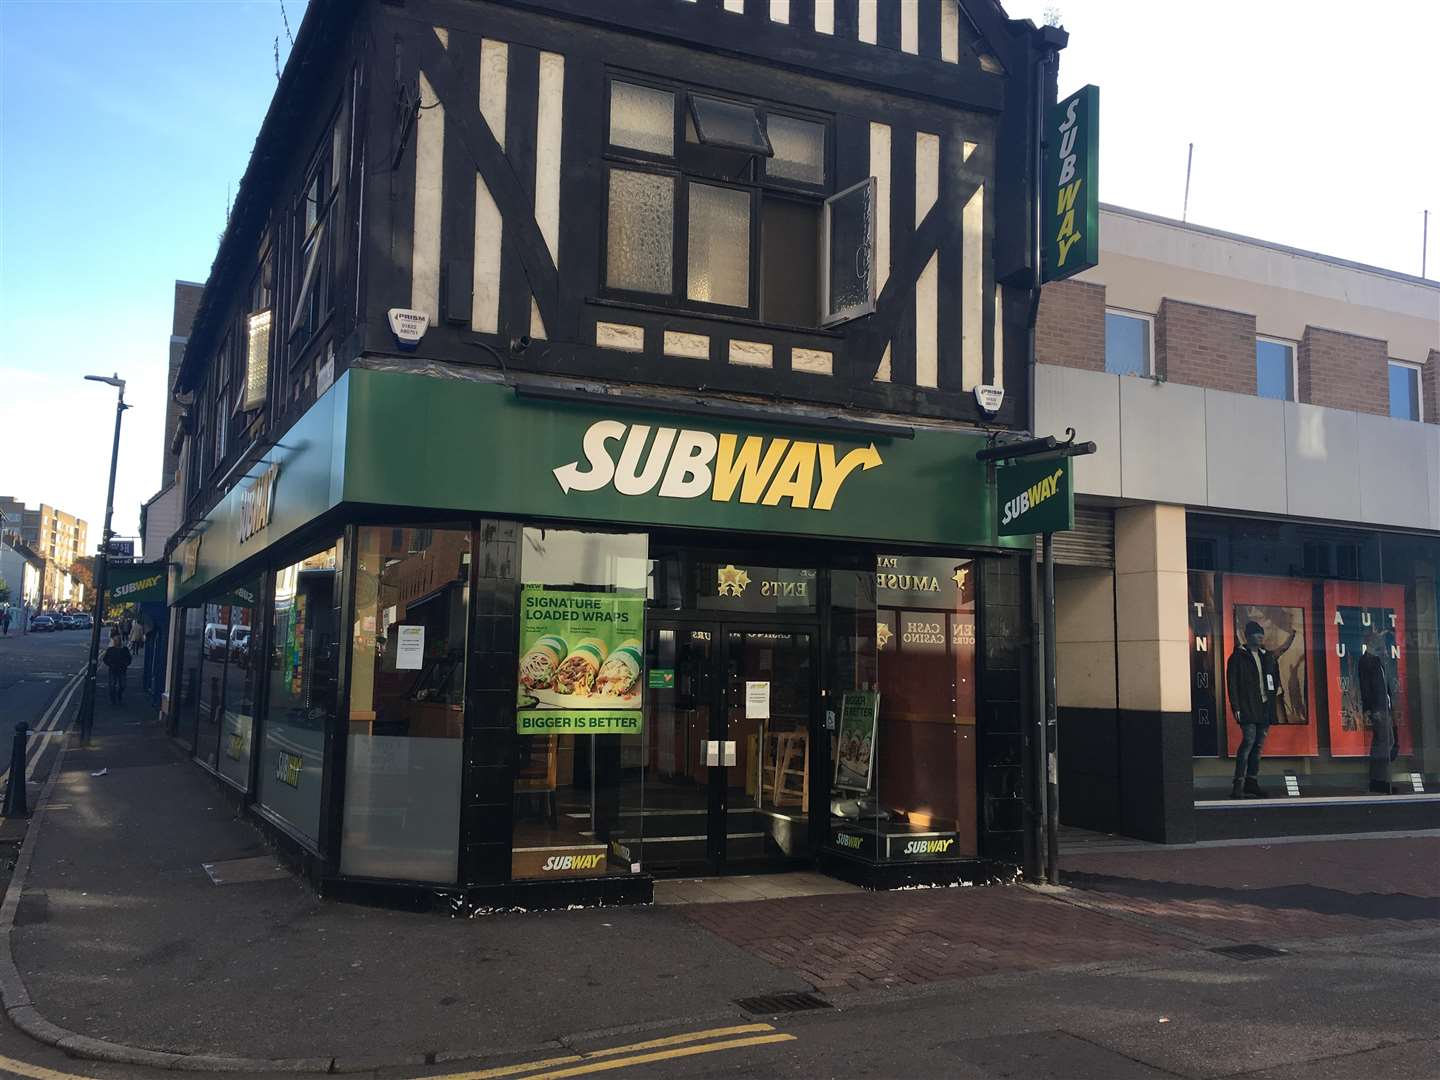 The Subway store in Week Street, Maidstone (4760505)